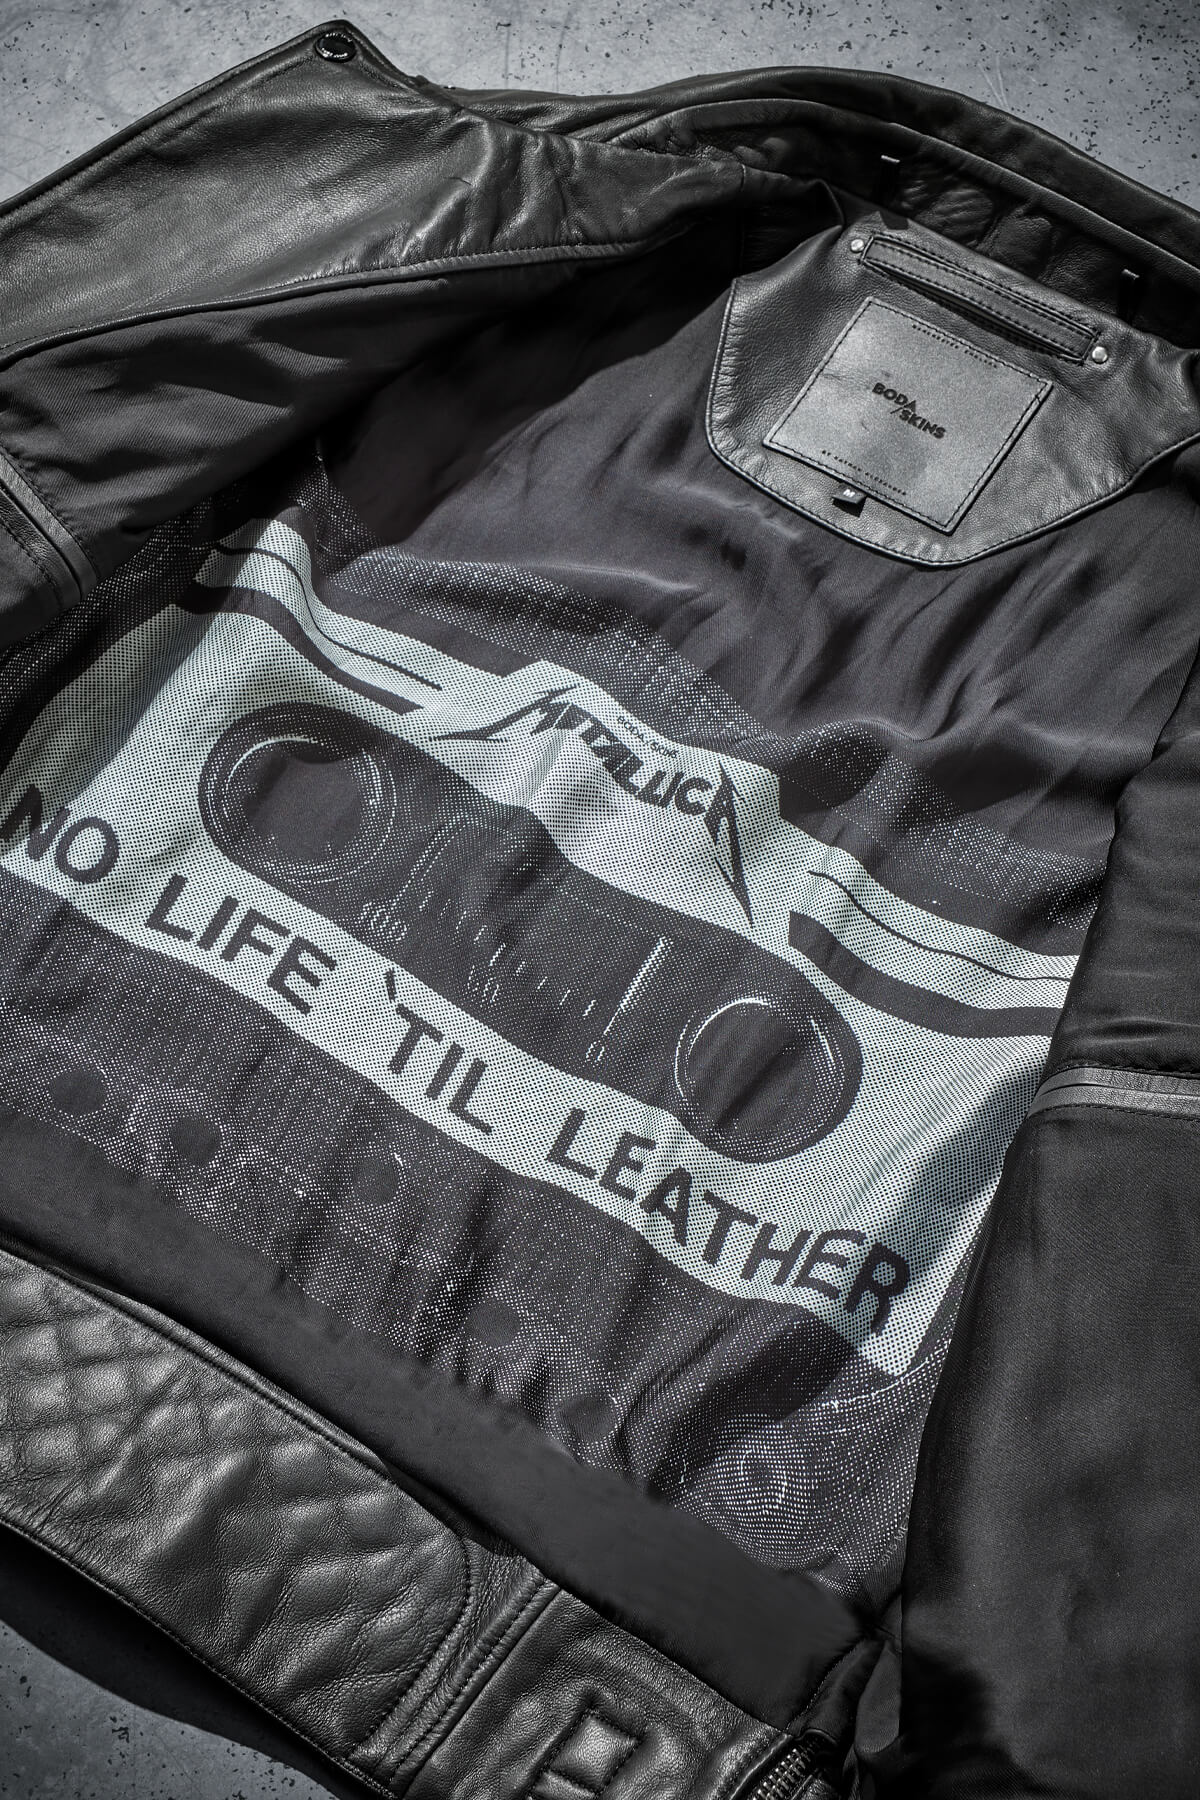 Kay Michaels: No Life 'Til Leather (Man)